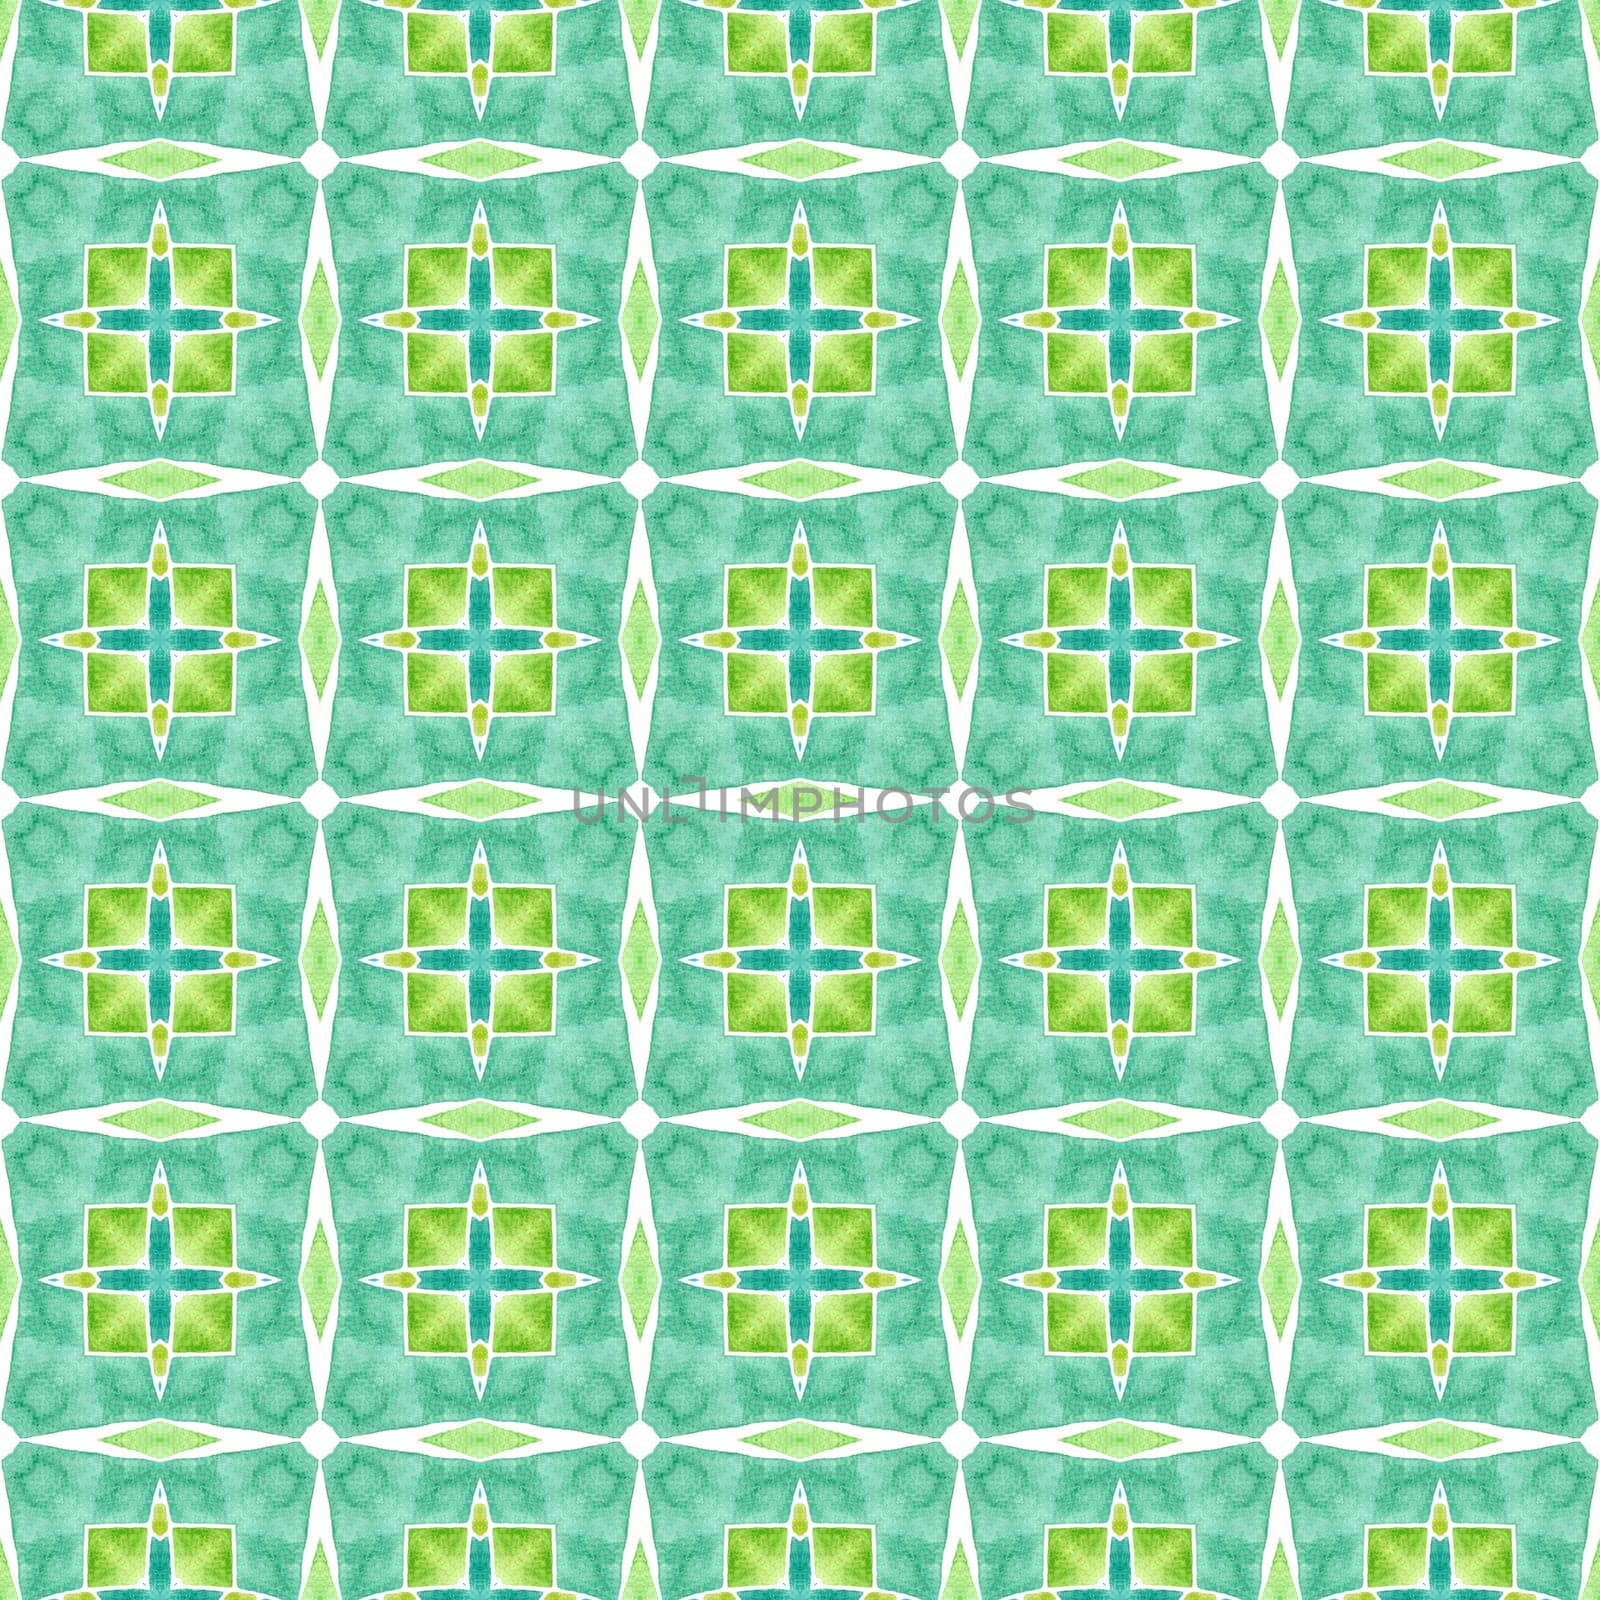 Textile ready gorgeous print, swimwear fabric, wallpaper, wrapping. Green charming boho chic summer design. Trendy organic green border. Organic tile.